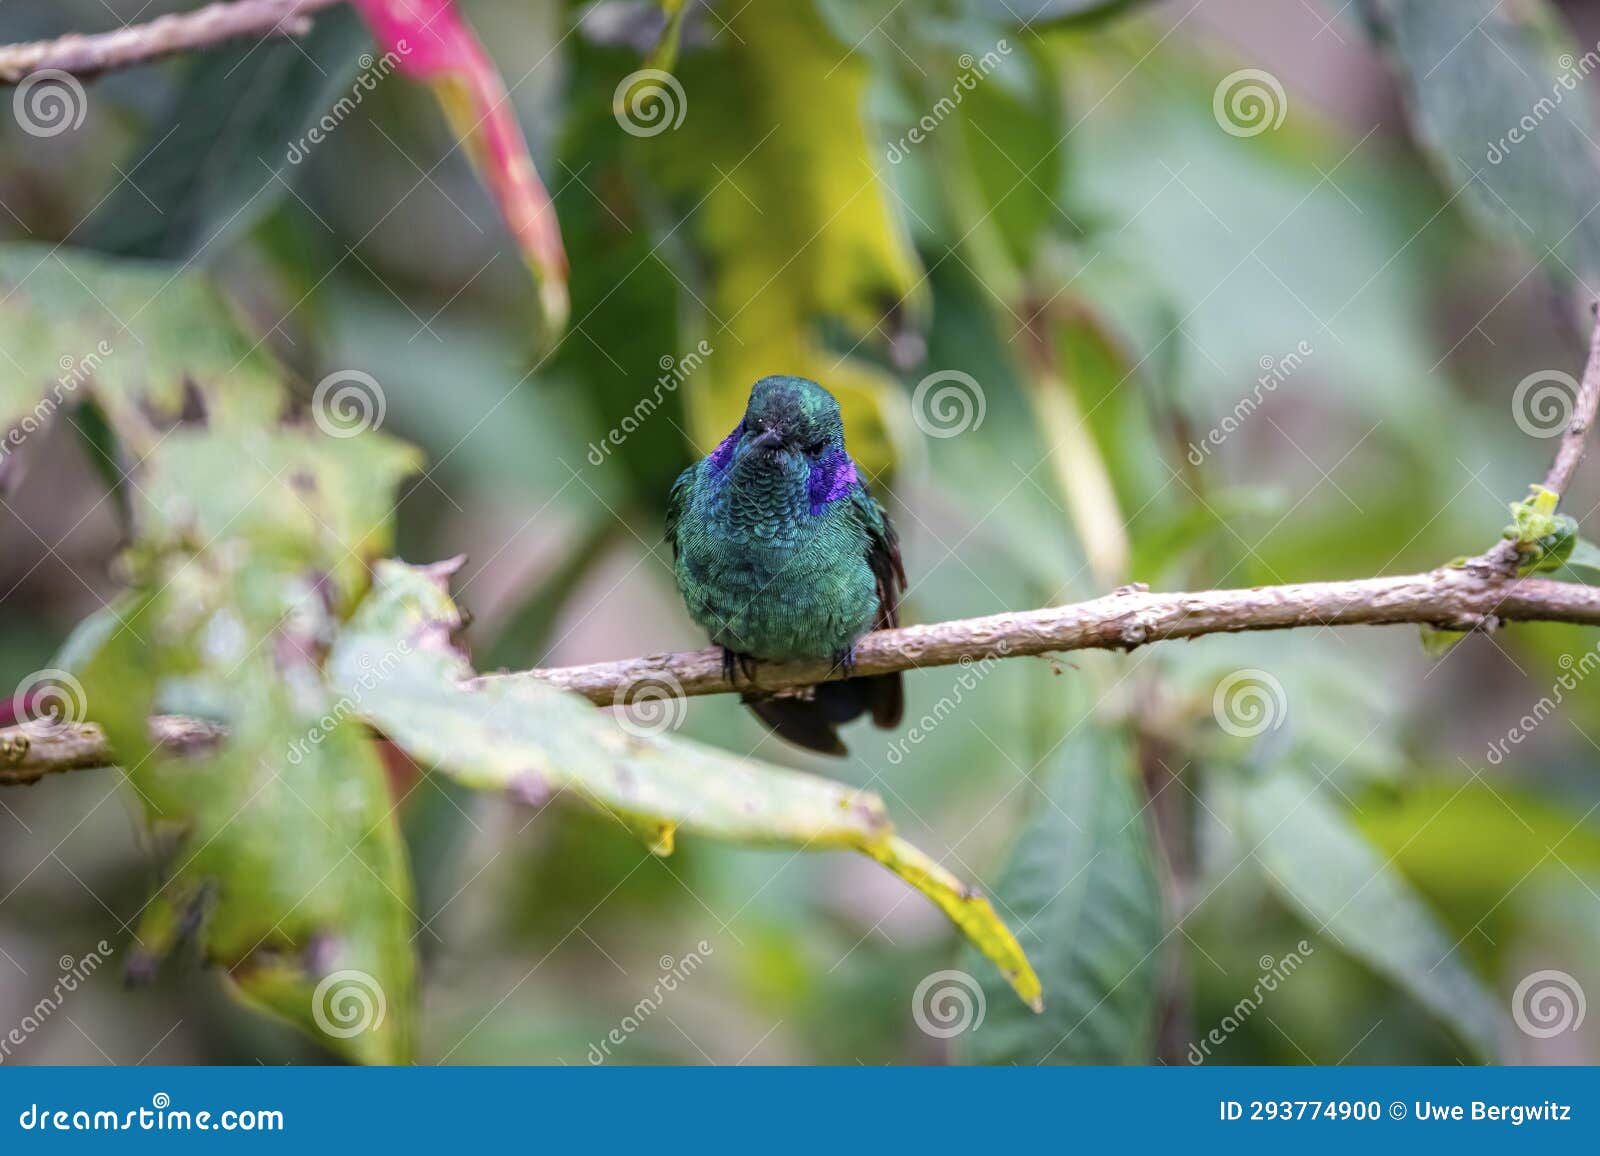 close-up of a green violet-ear hummingbird (colibri thalassinus) perched on tiny branch, facing camera,